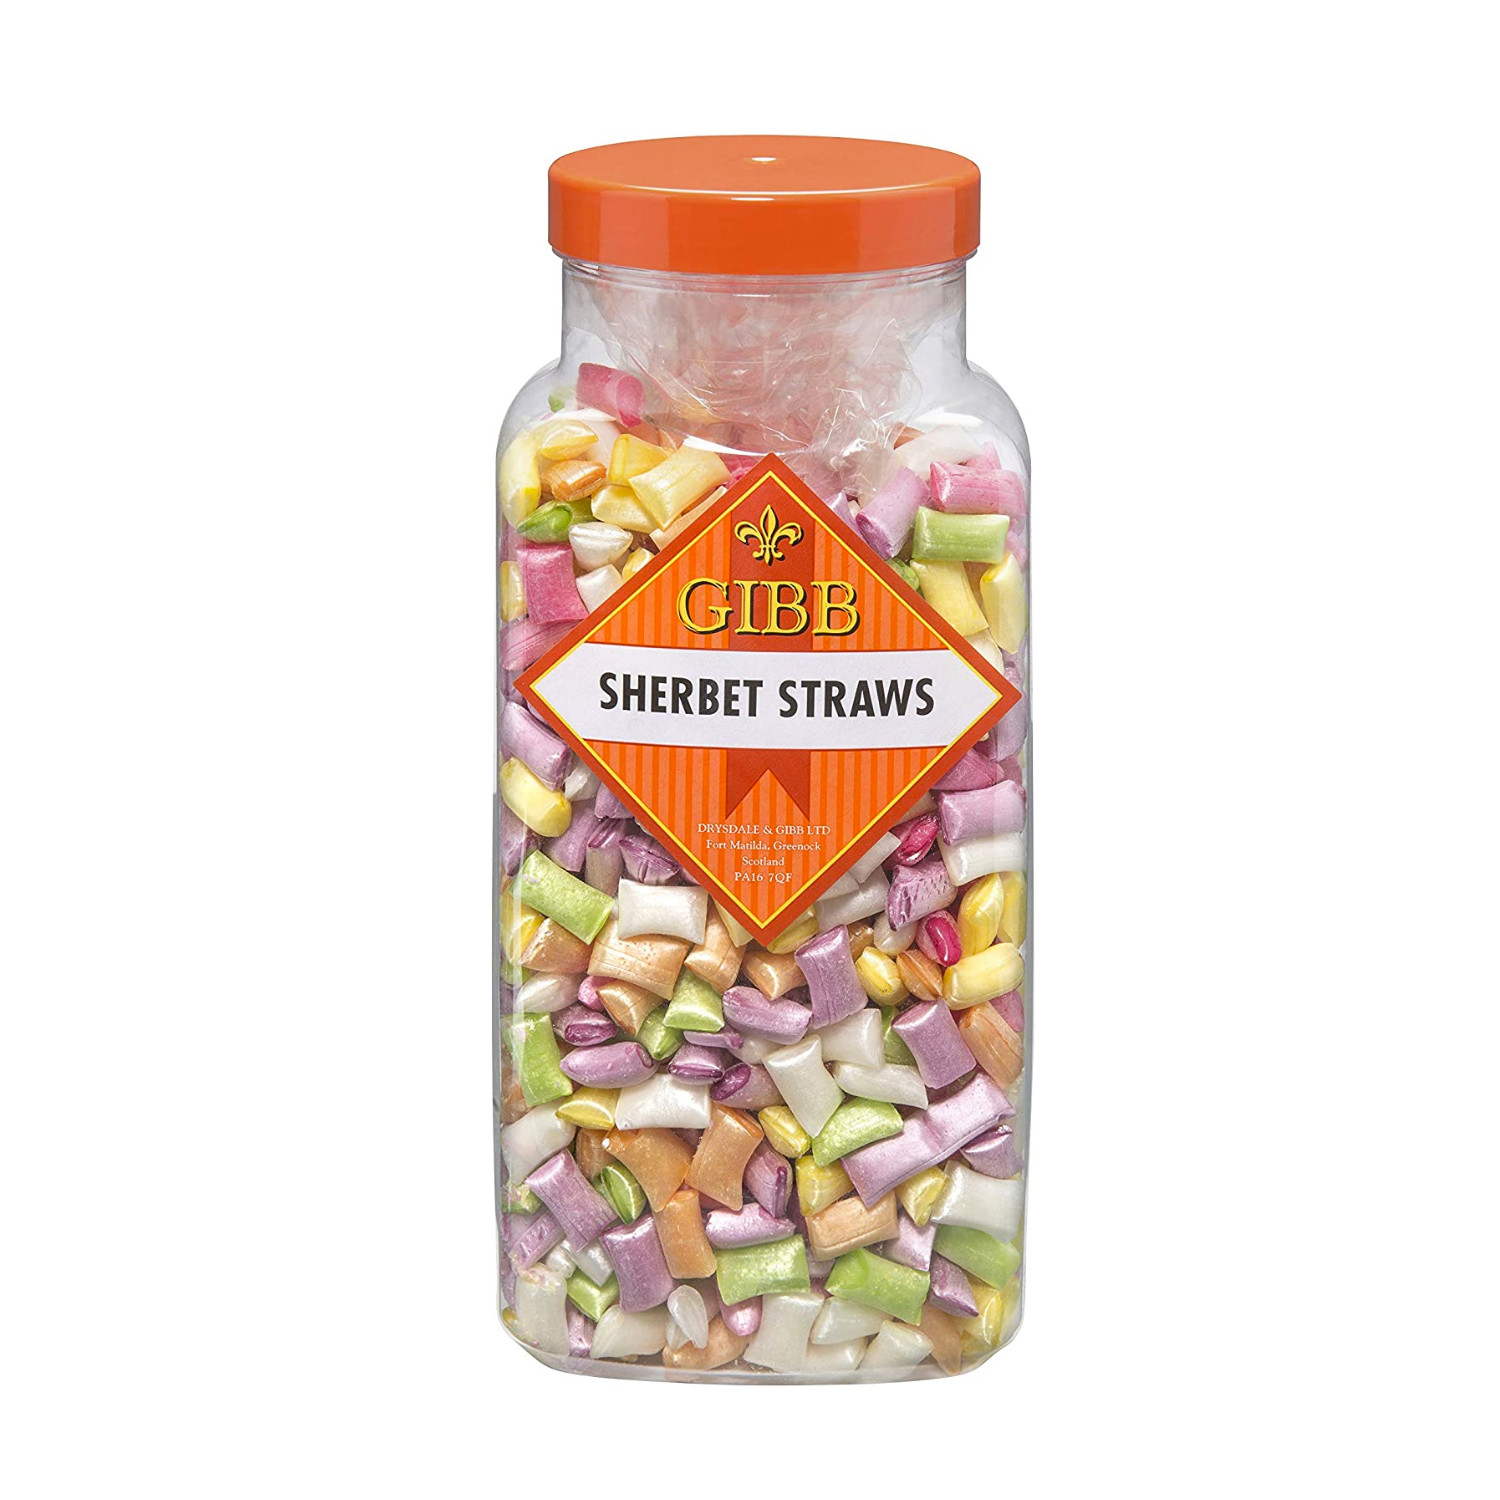 Gibb – Sherbet Straws (1 x 2.75kg jar)